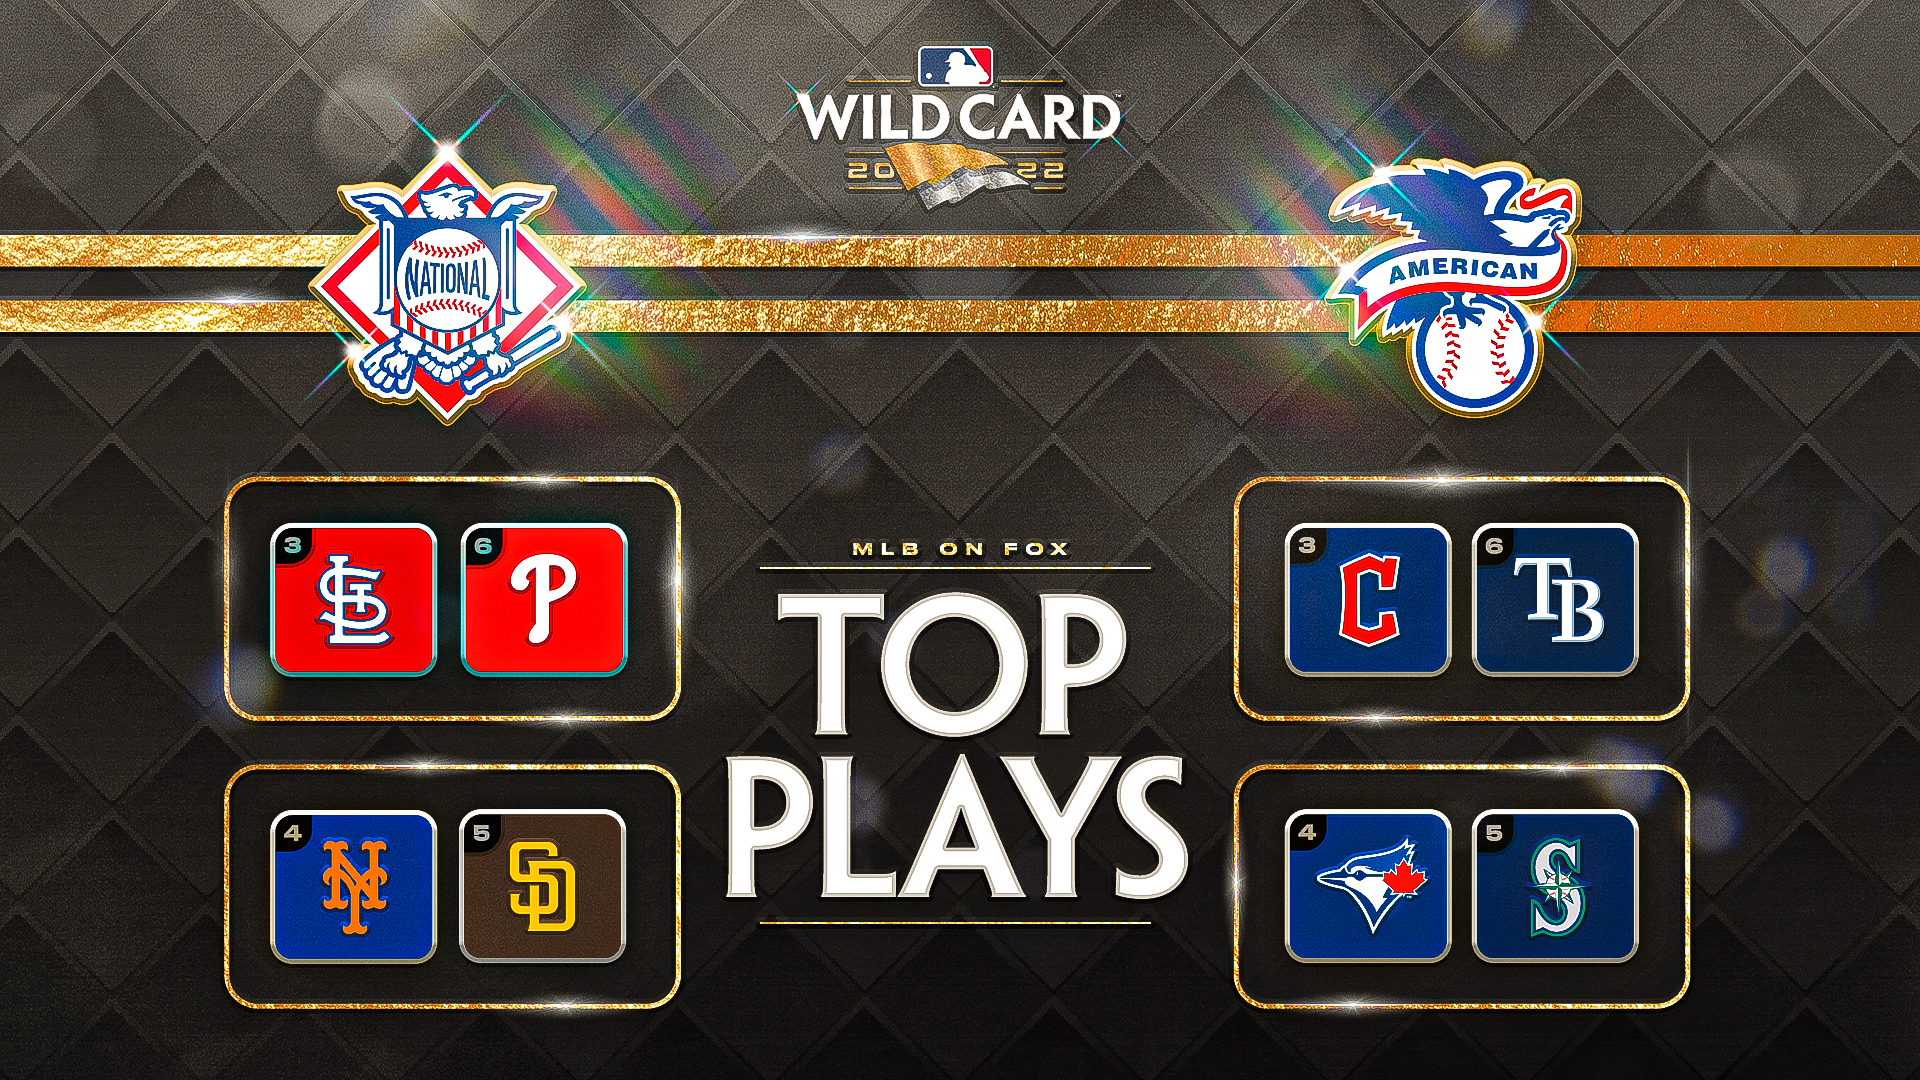 Padres-Mets 2022 Wild Card Series Game 2 FAQ